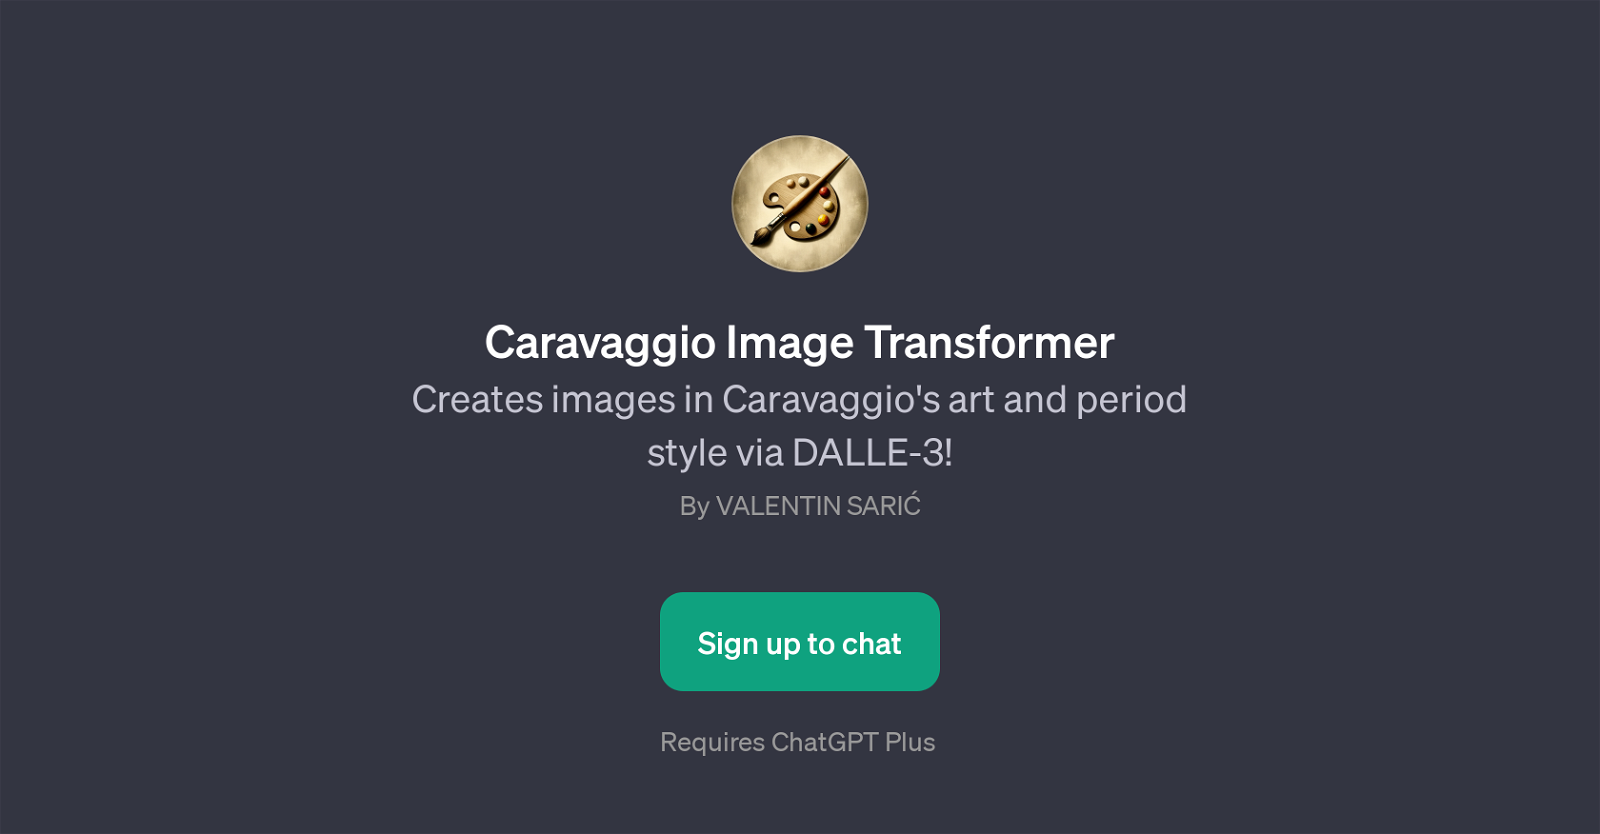 Caravaggio Image Transformer website